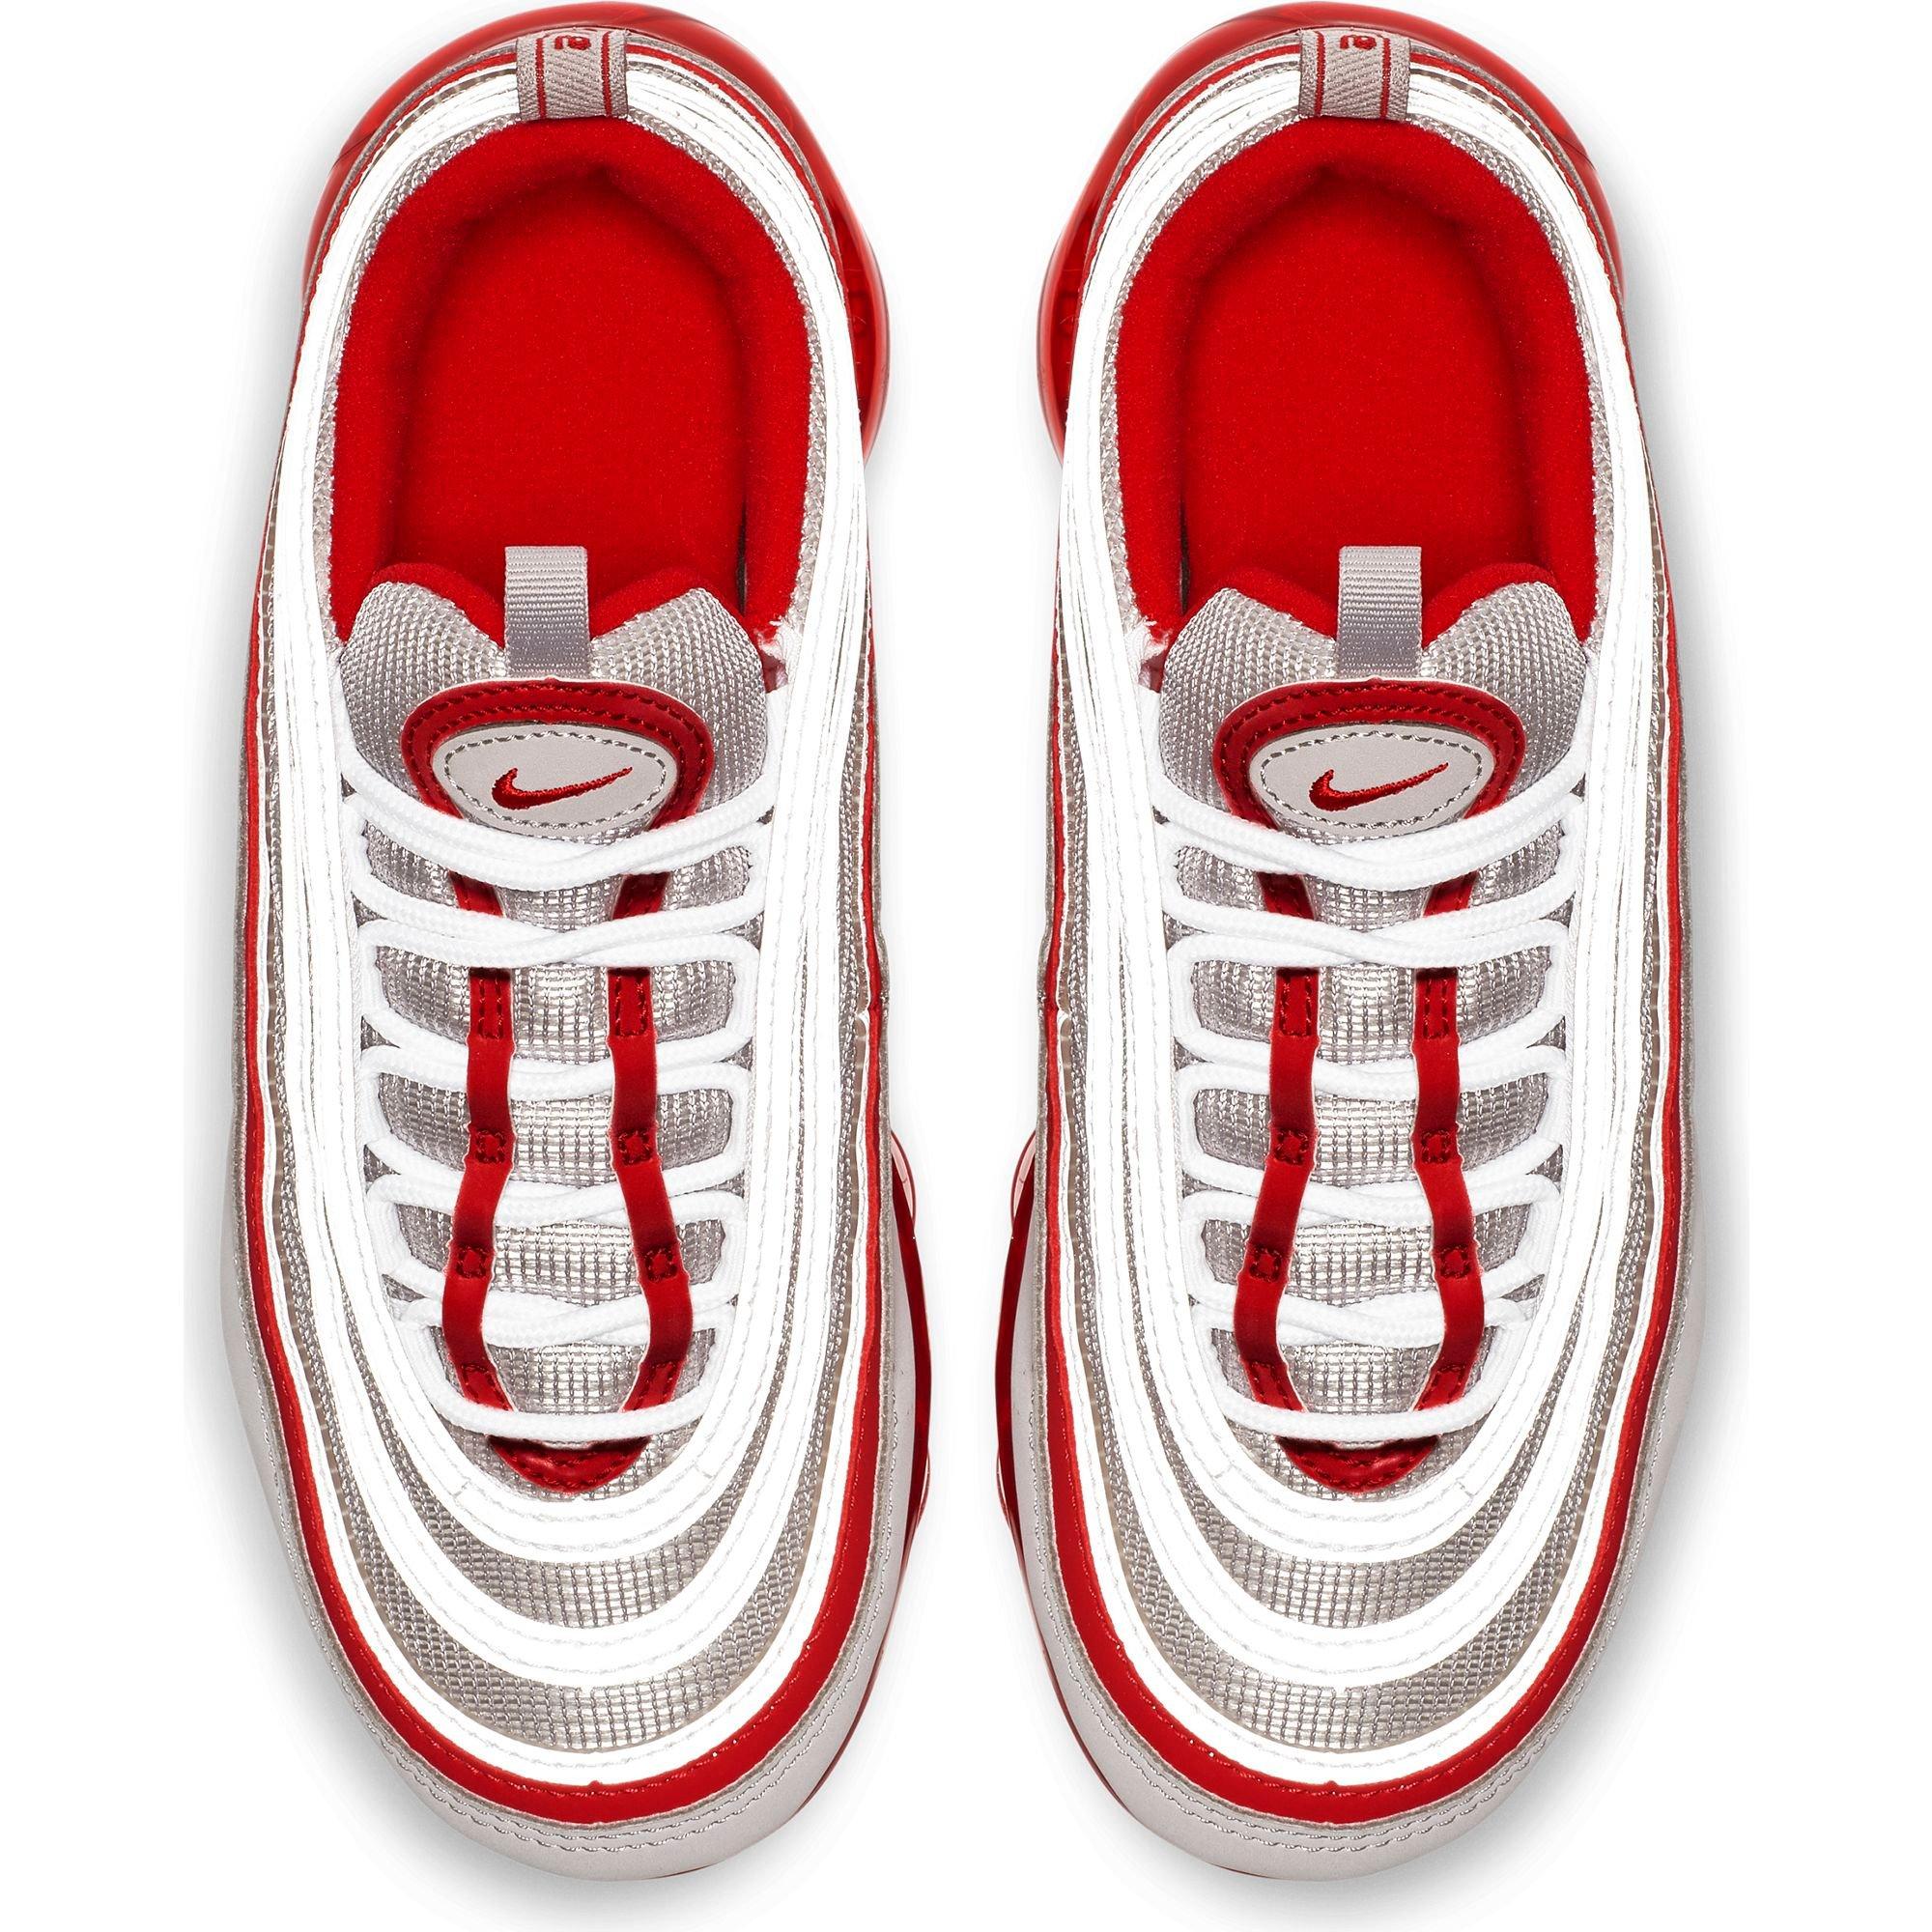 Two fresh new Nike VaporMax 97 colorways Kids Foot